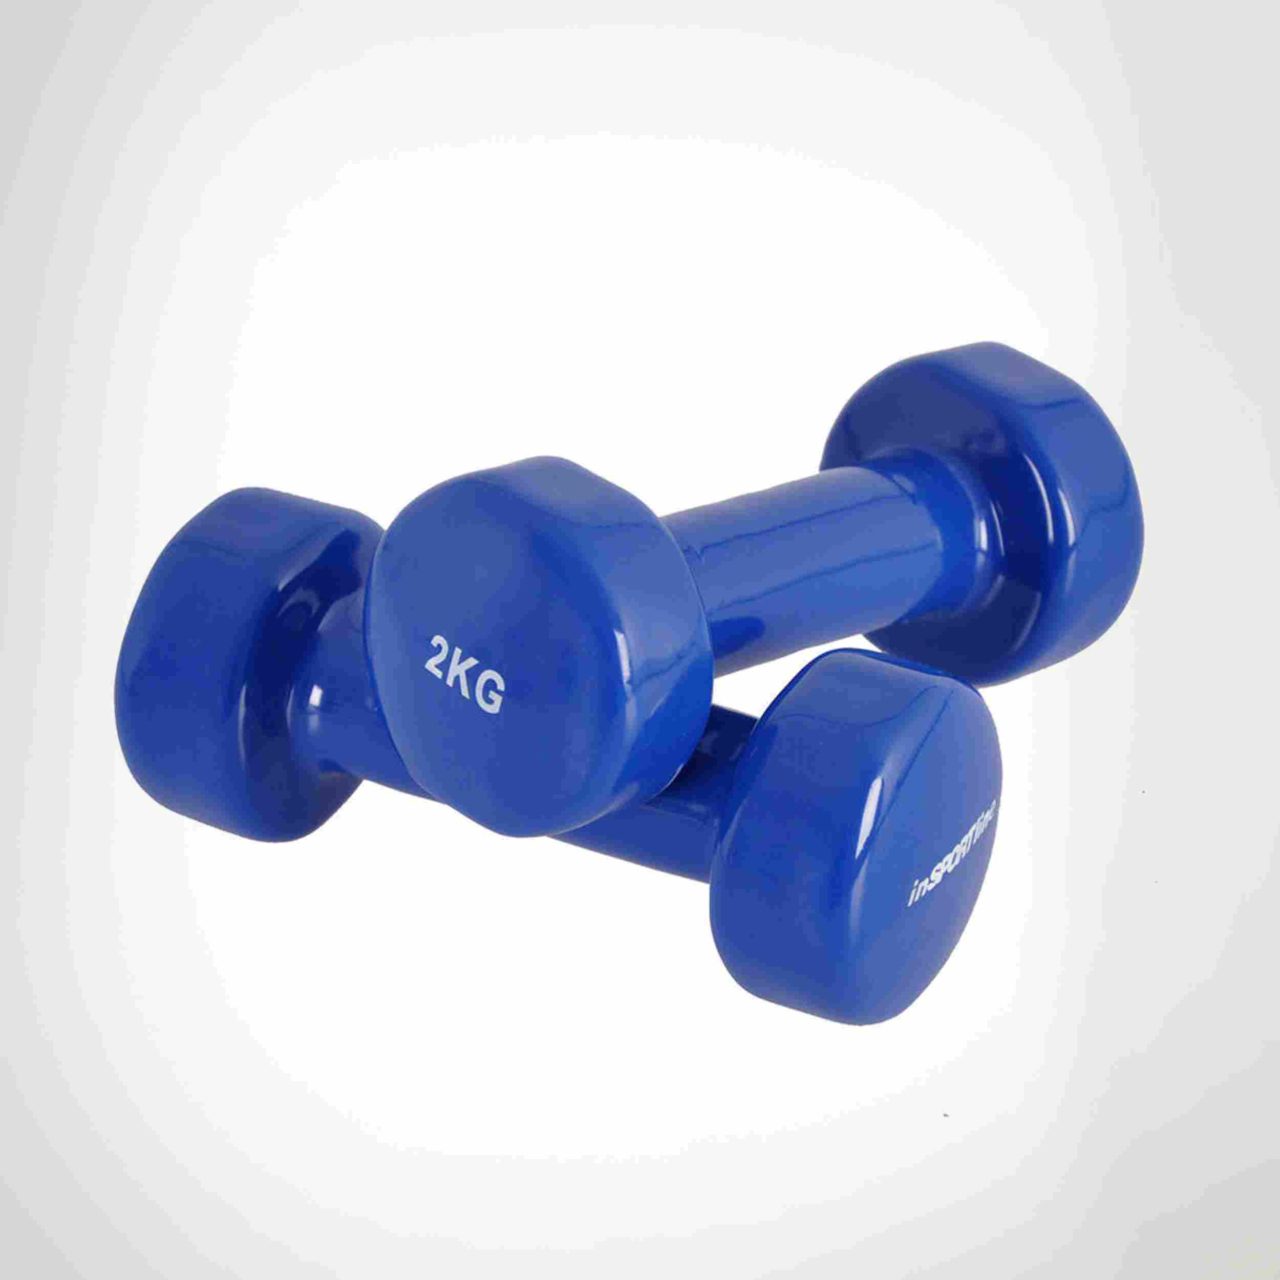 product-dumbells-blue-2kg-1280x1280.jpg